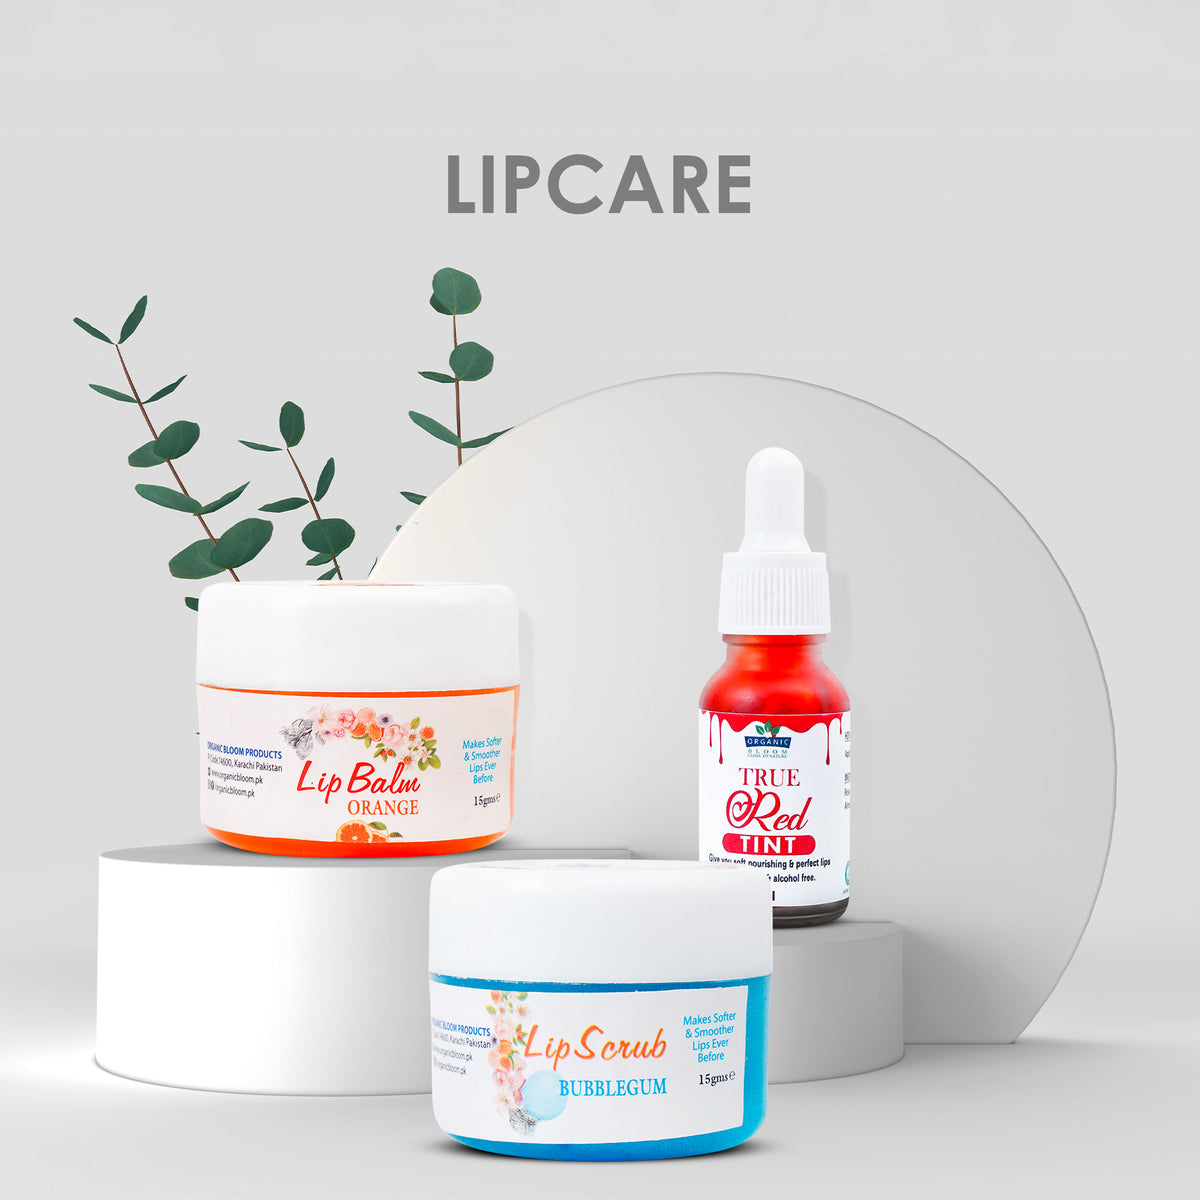 Lipcare ( Lipbalm+ Lip scrub+ tint)